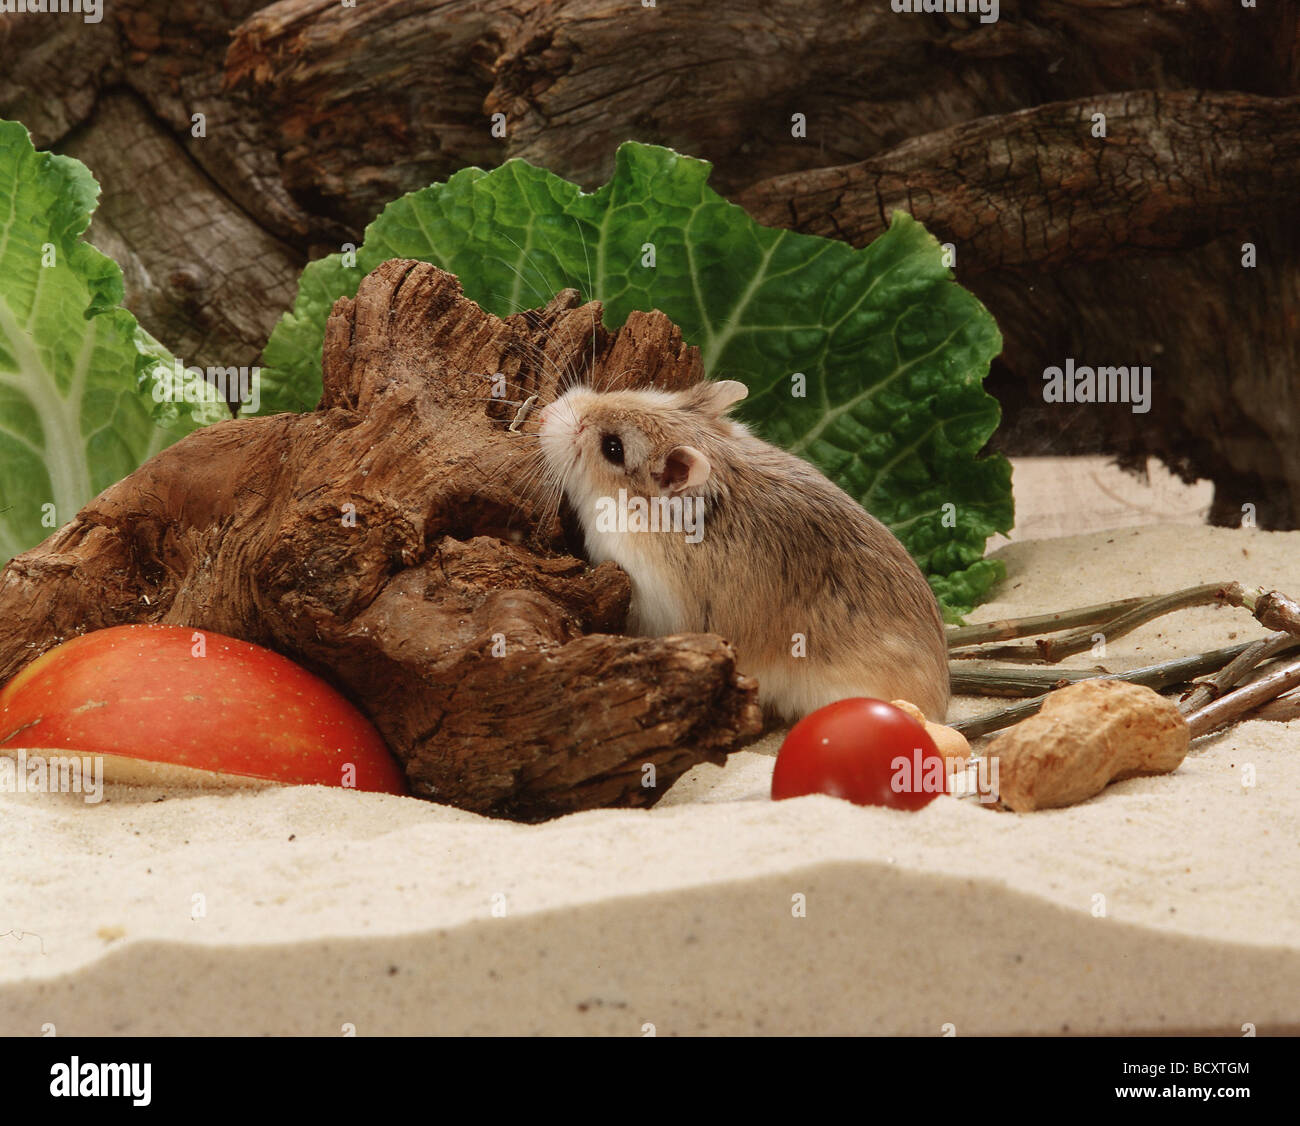 Roborovski Dwarf Hamster (Phodopus roborovskii) in its enclosure with log and food Stock Photo